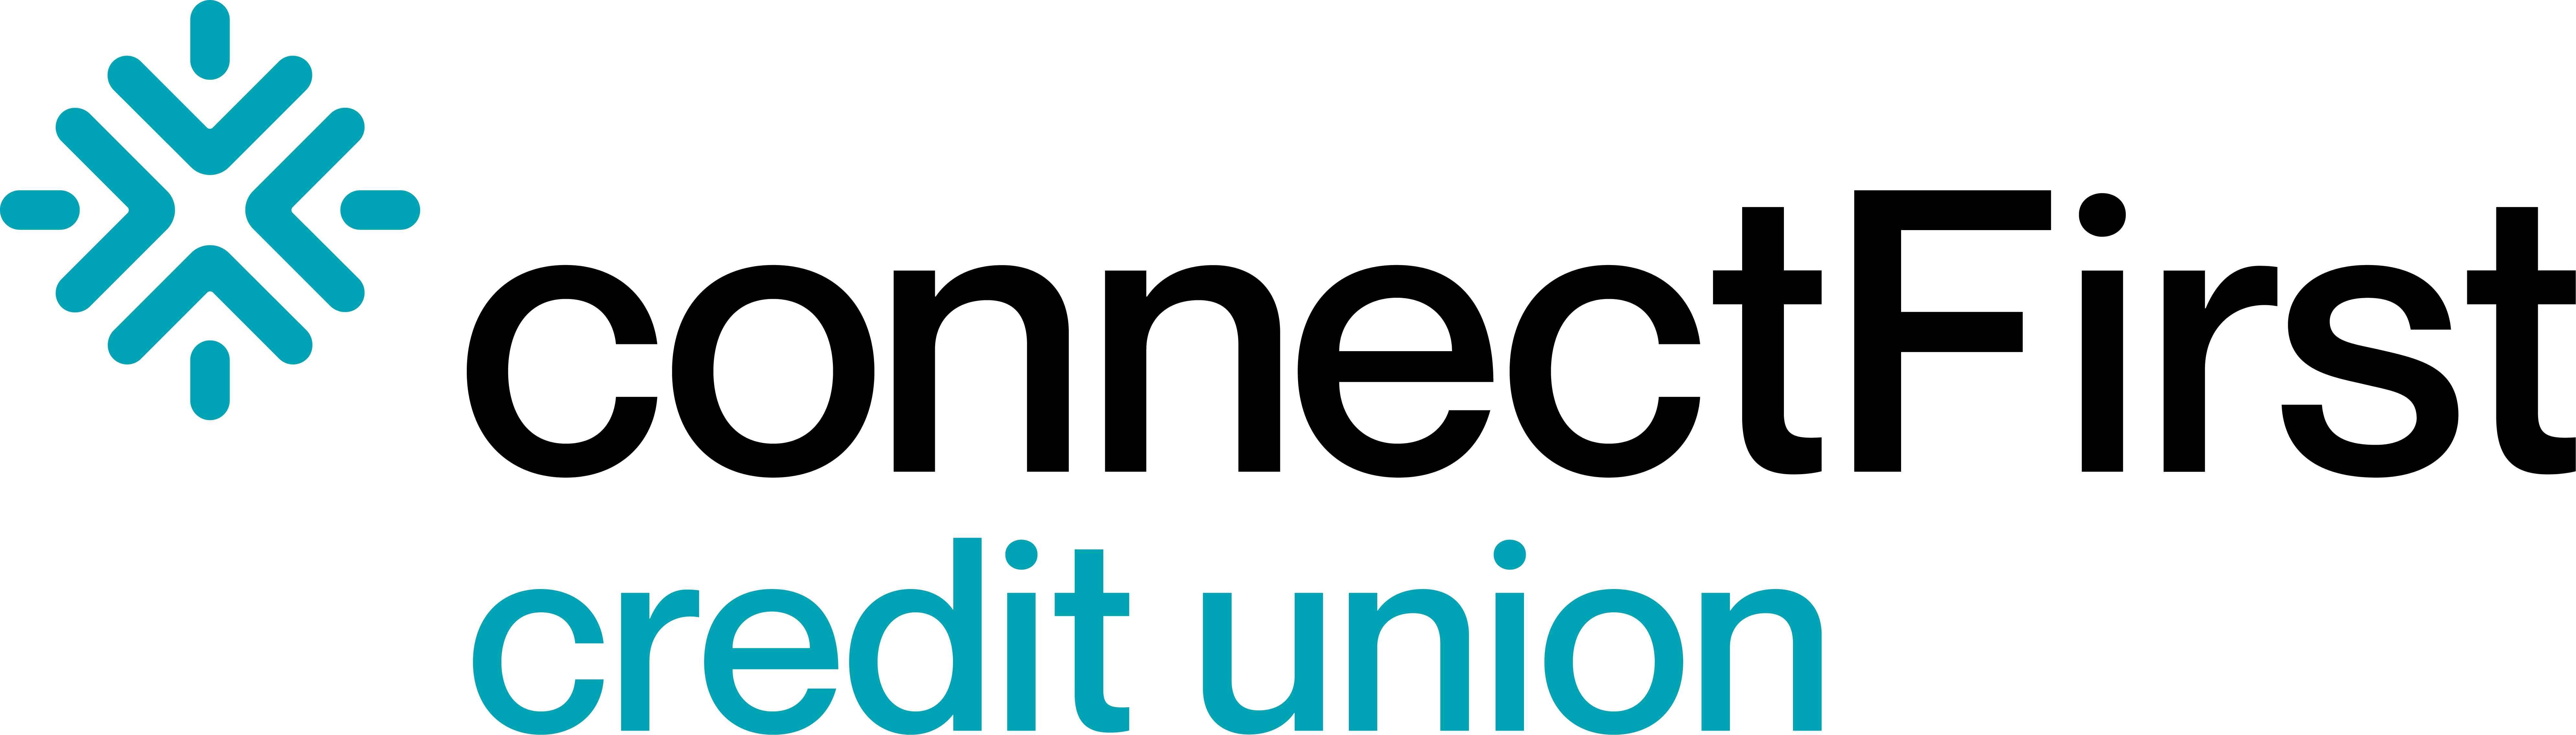 connectFirst credit union logo